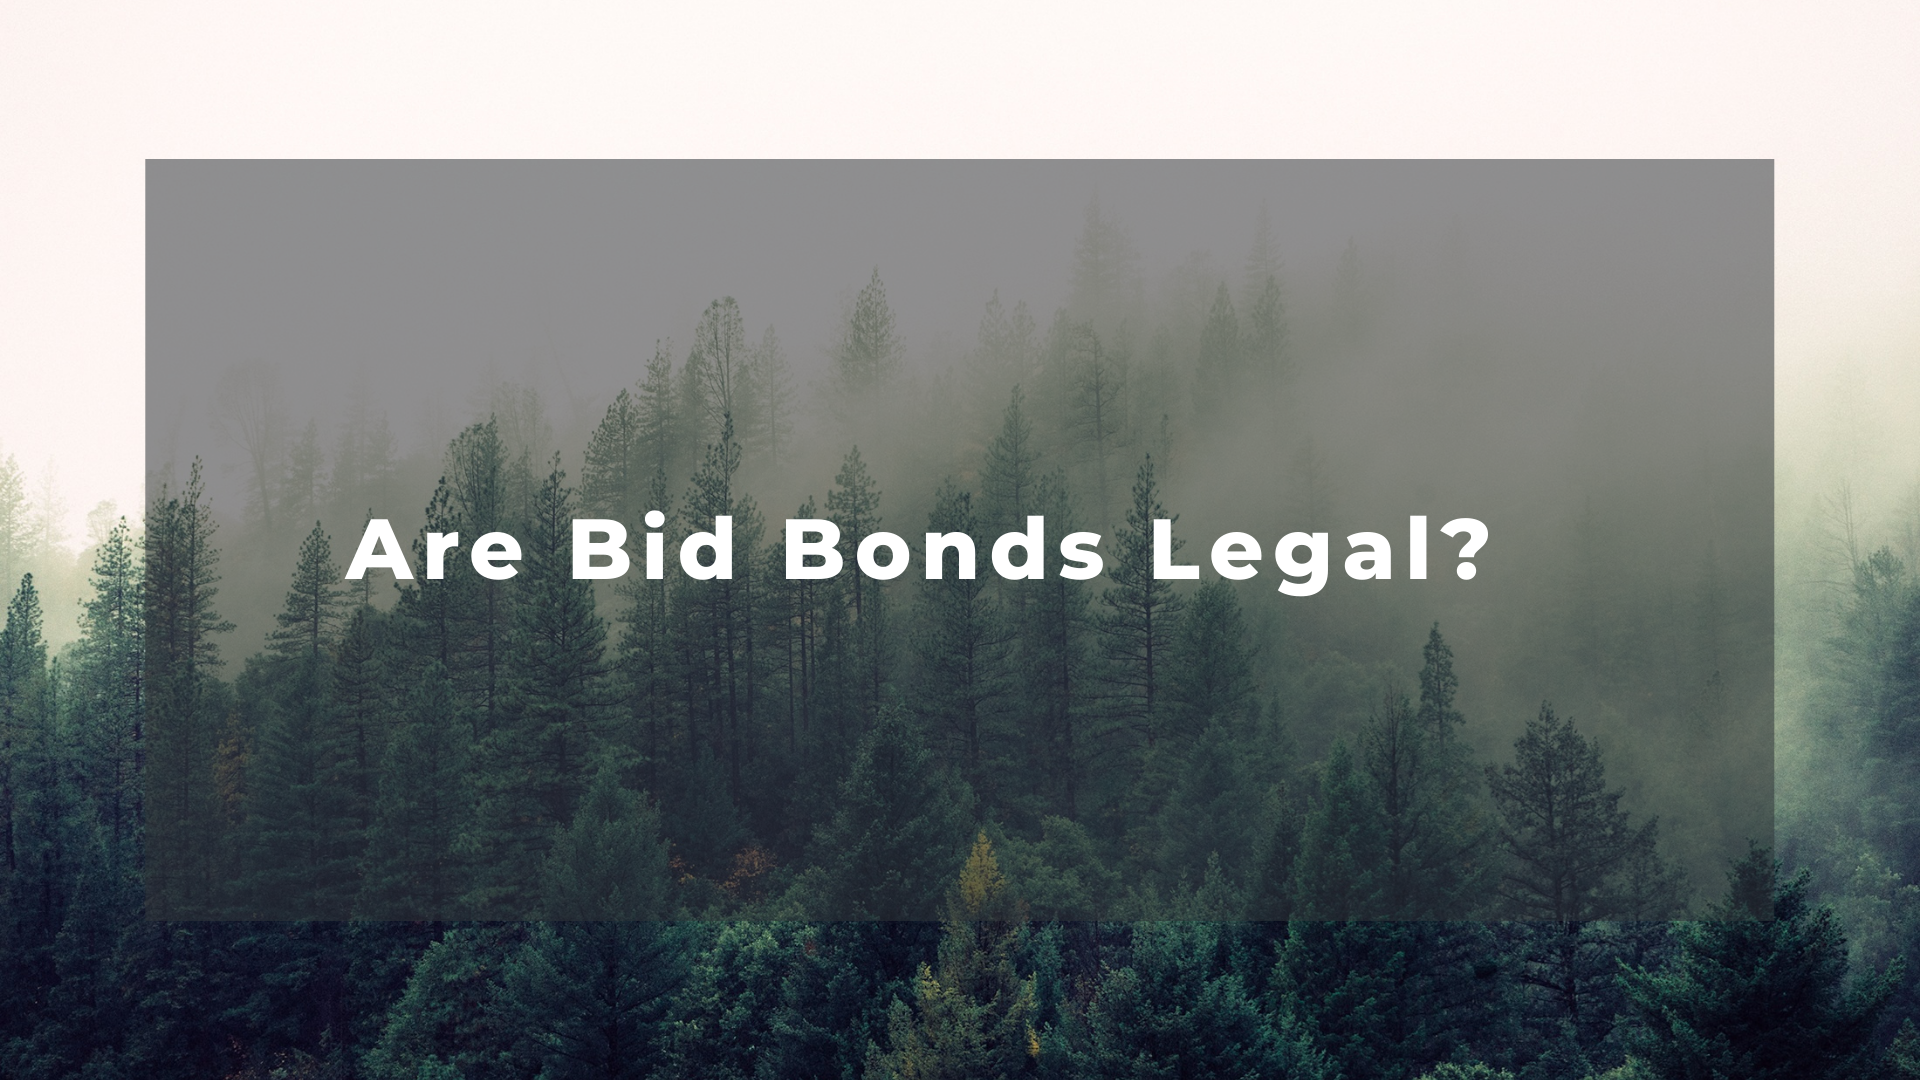 bid bond - Why do businesses need bid bonds - trees